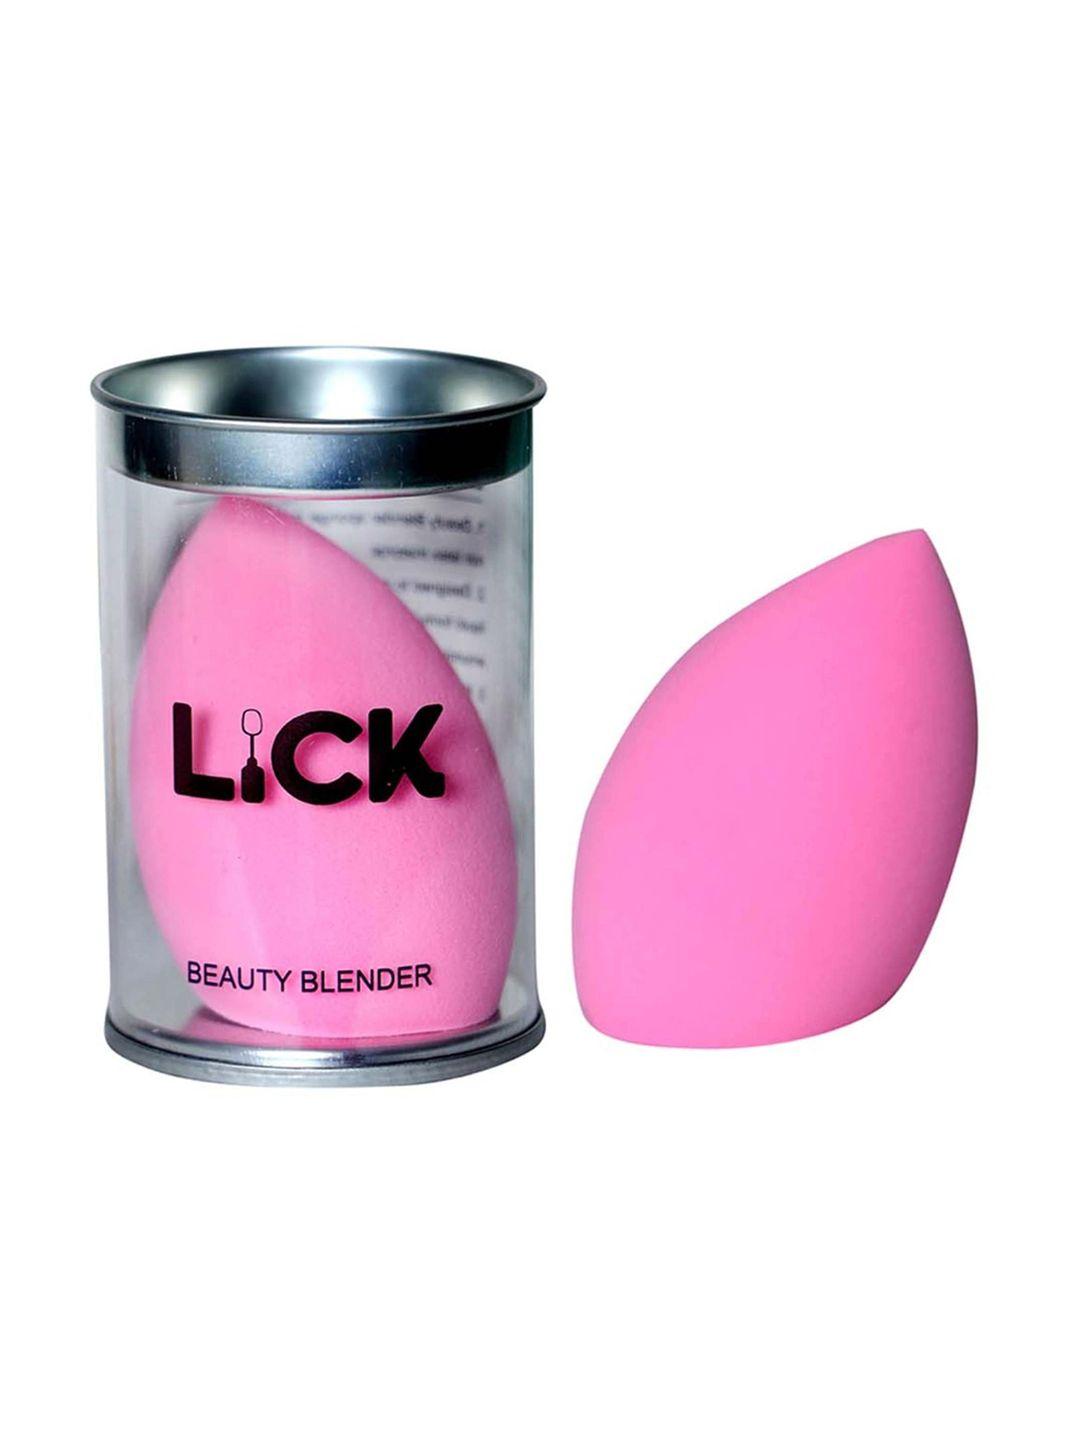 lick beauty blender sponge - pink